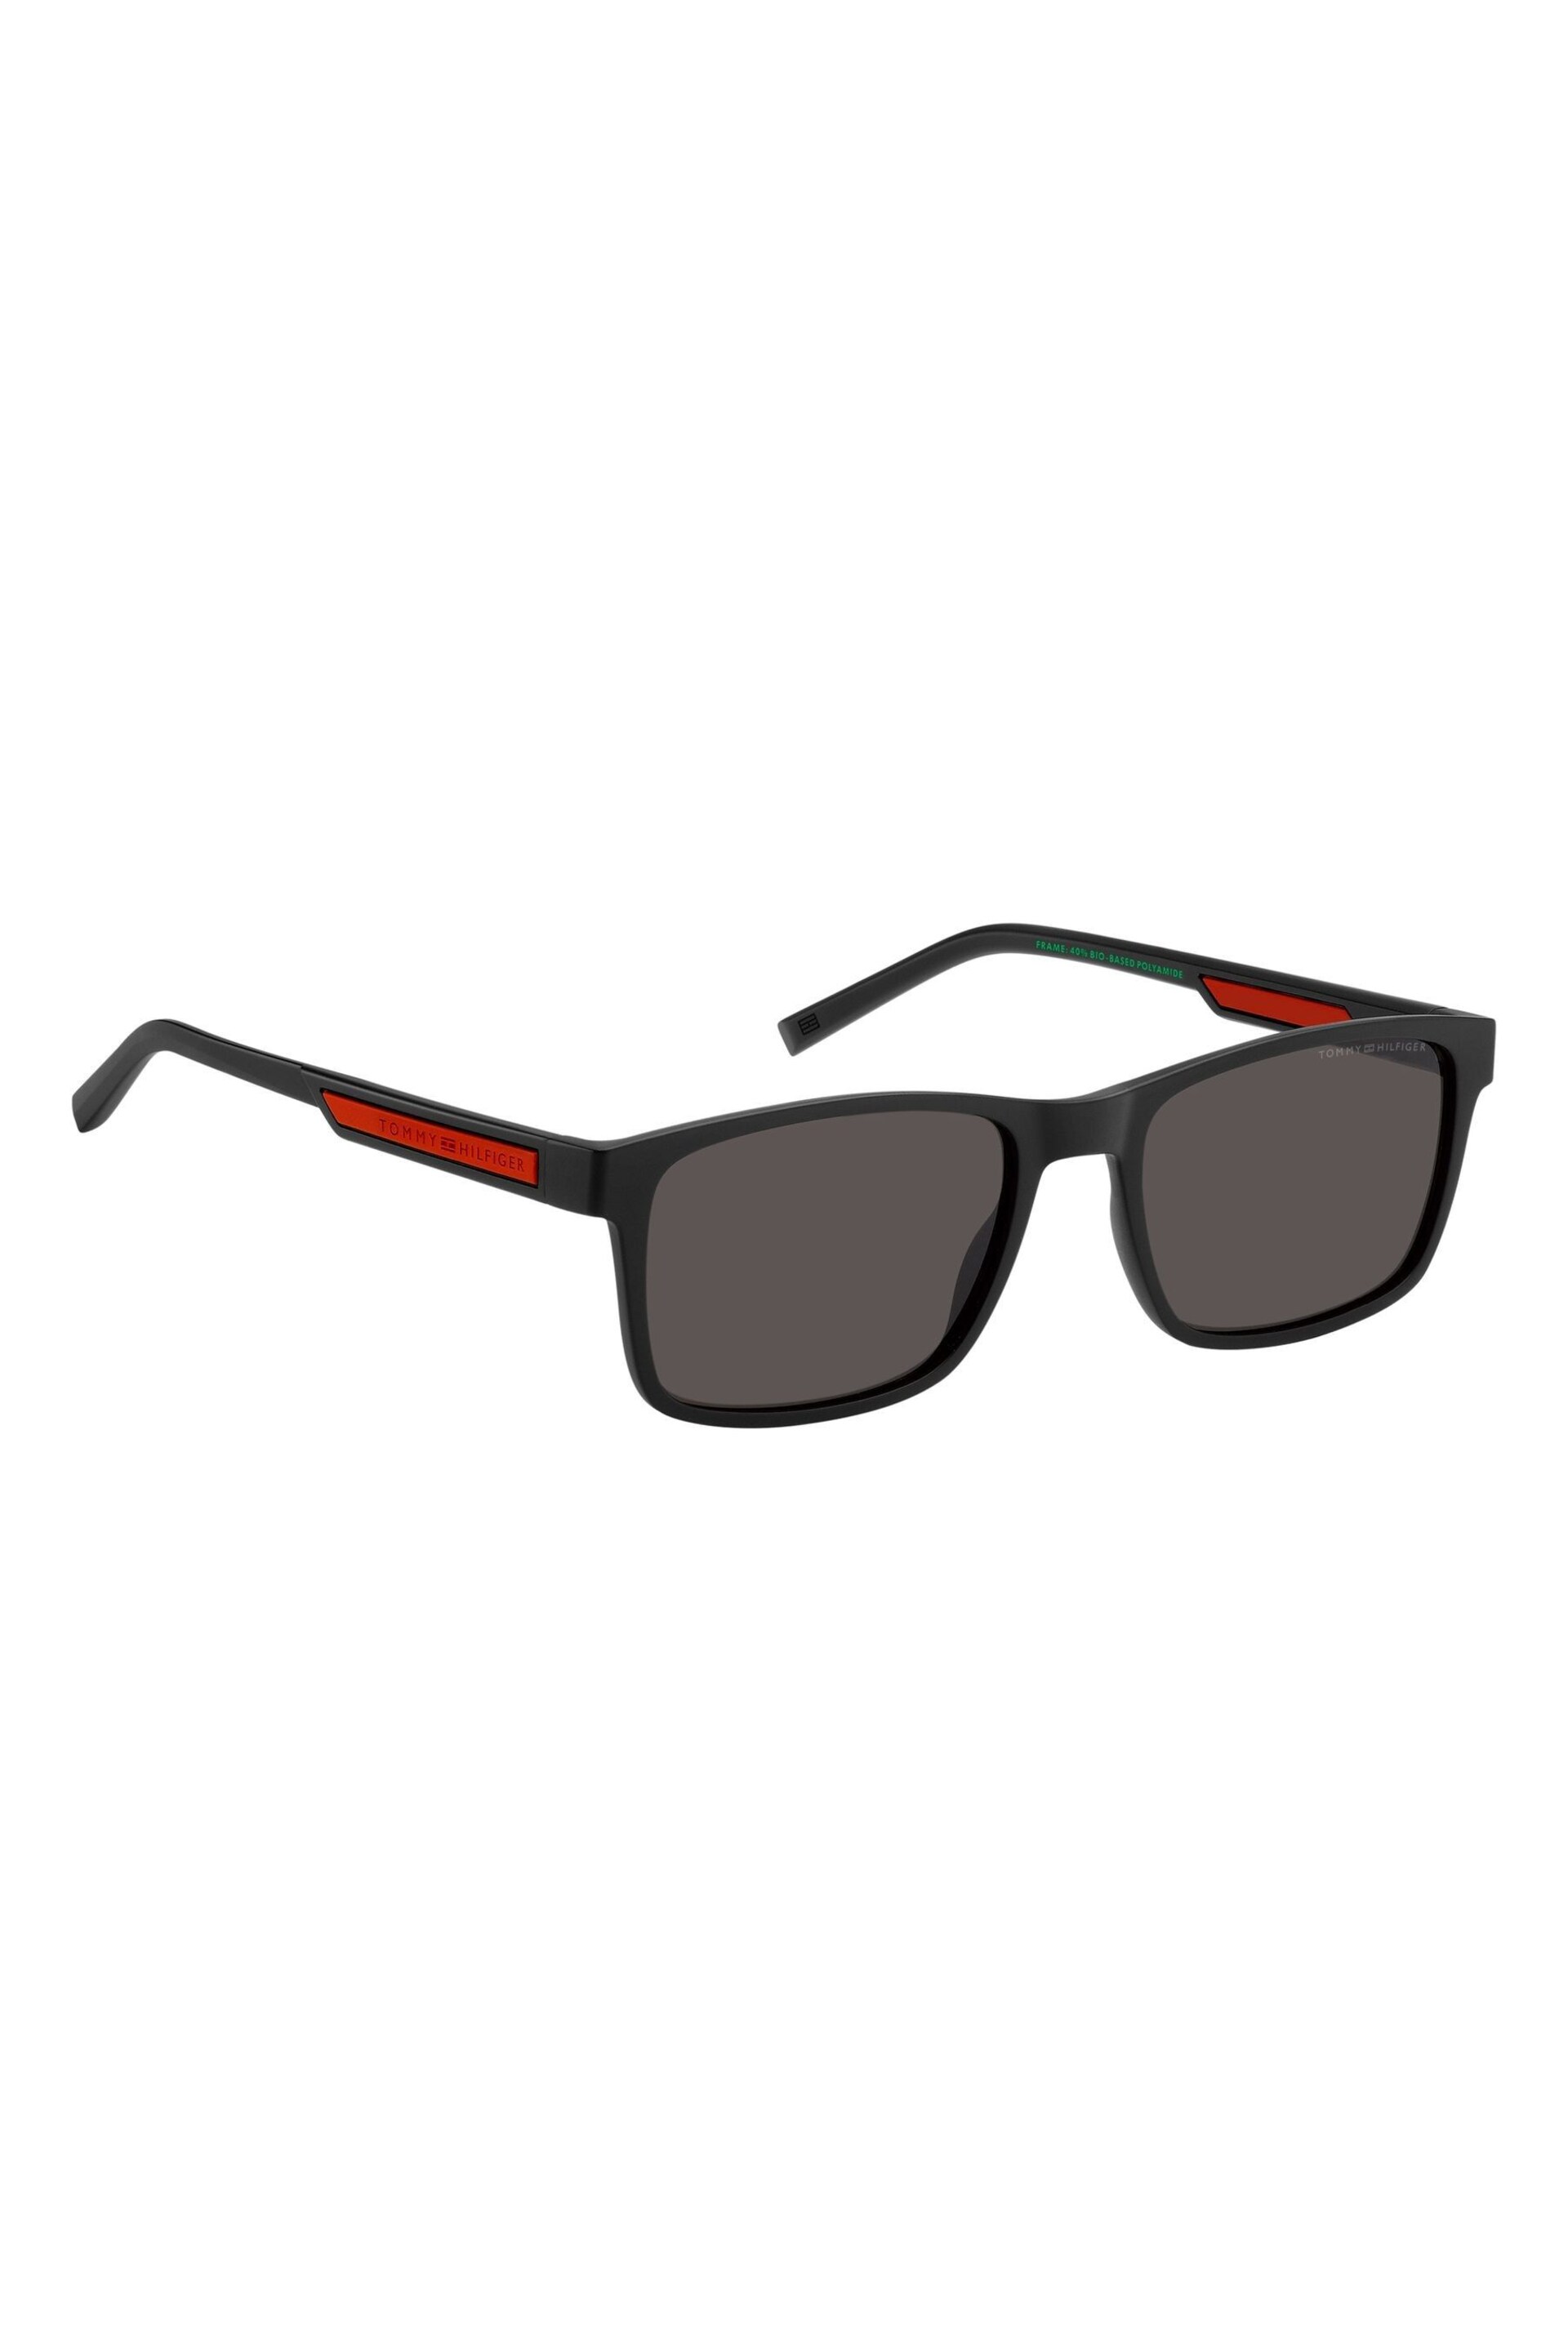 Tommy Hilfiger 2089/S Rectangular Black Sunglasses - Image 2 of 4